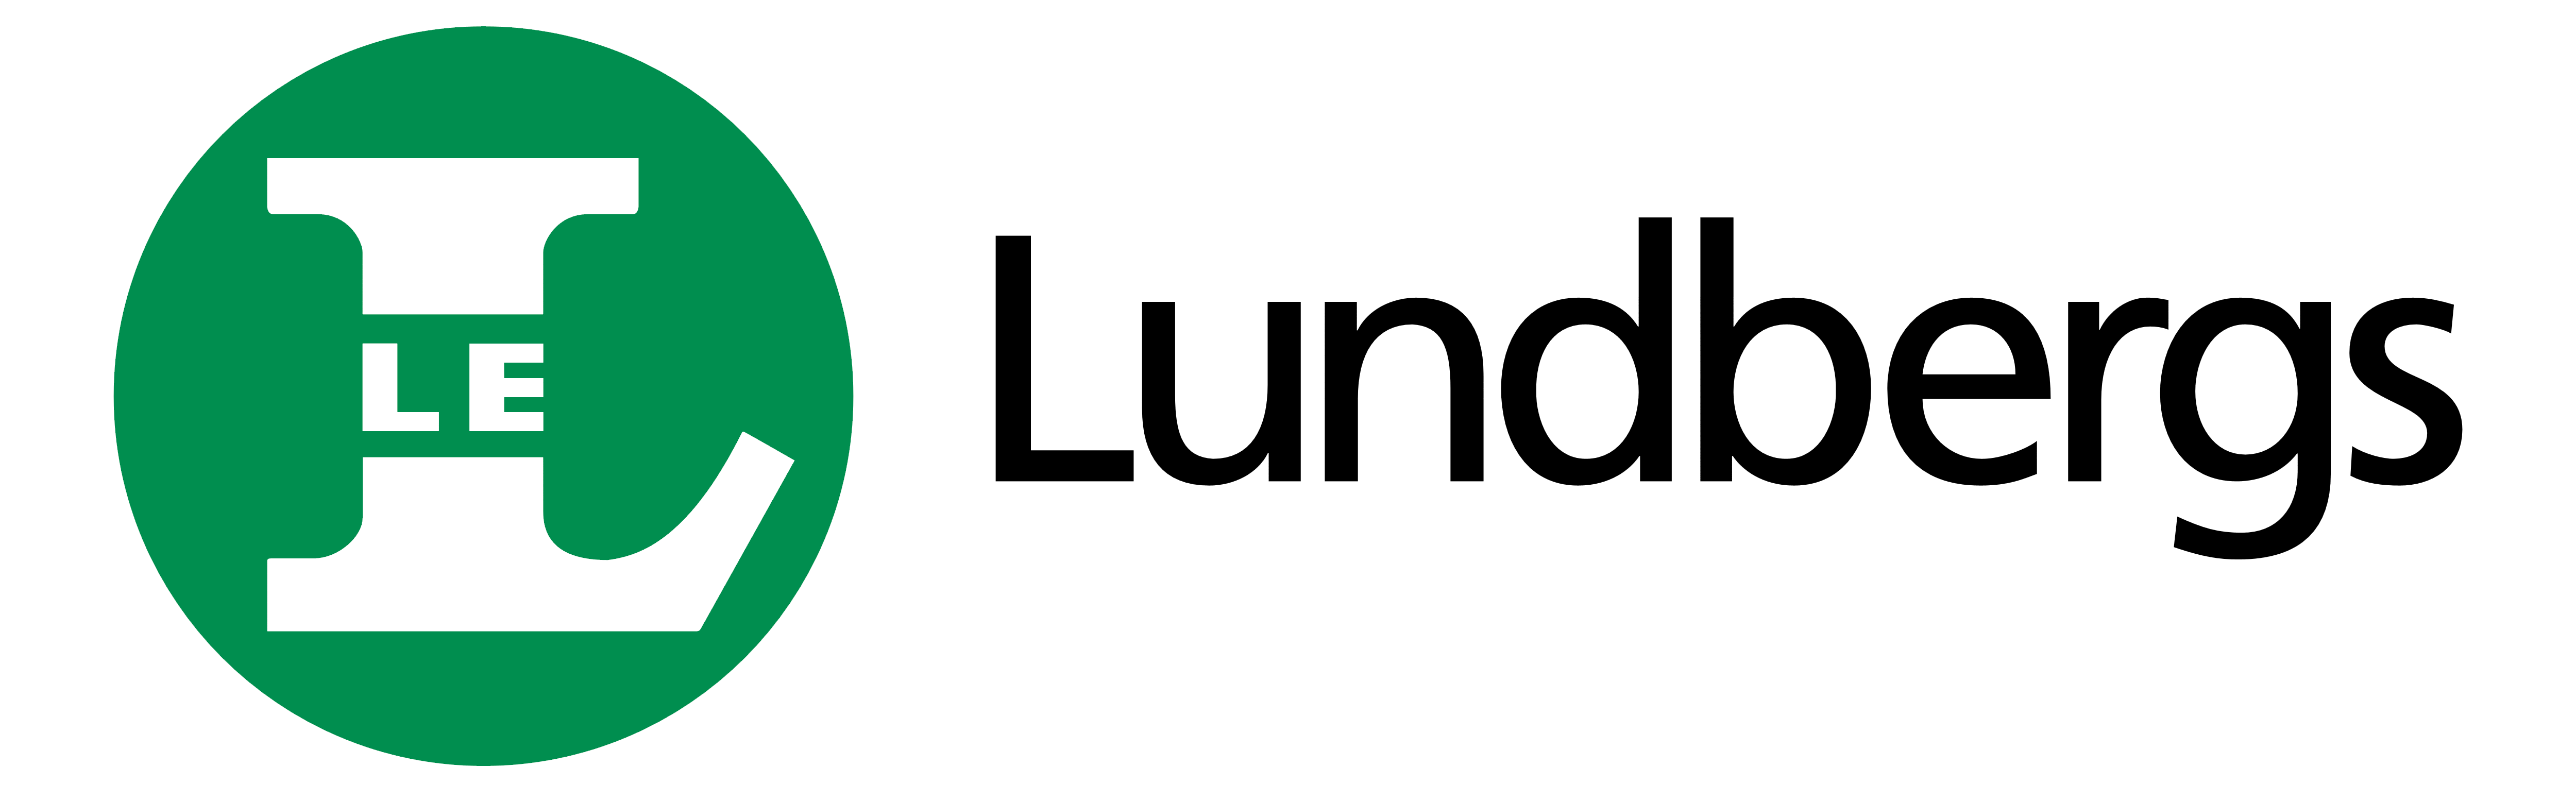 Lundbergs Brand Logo